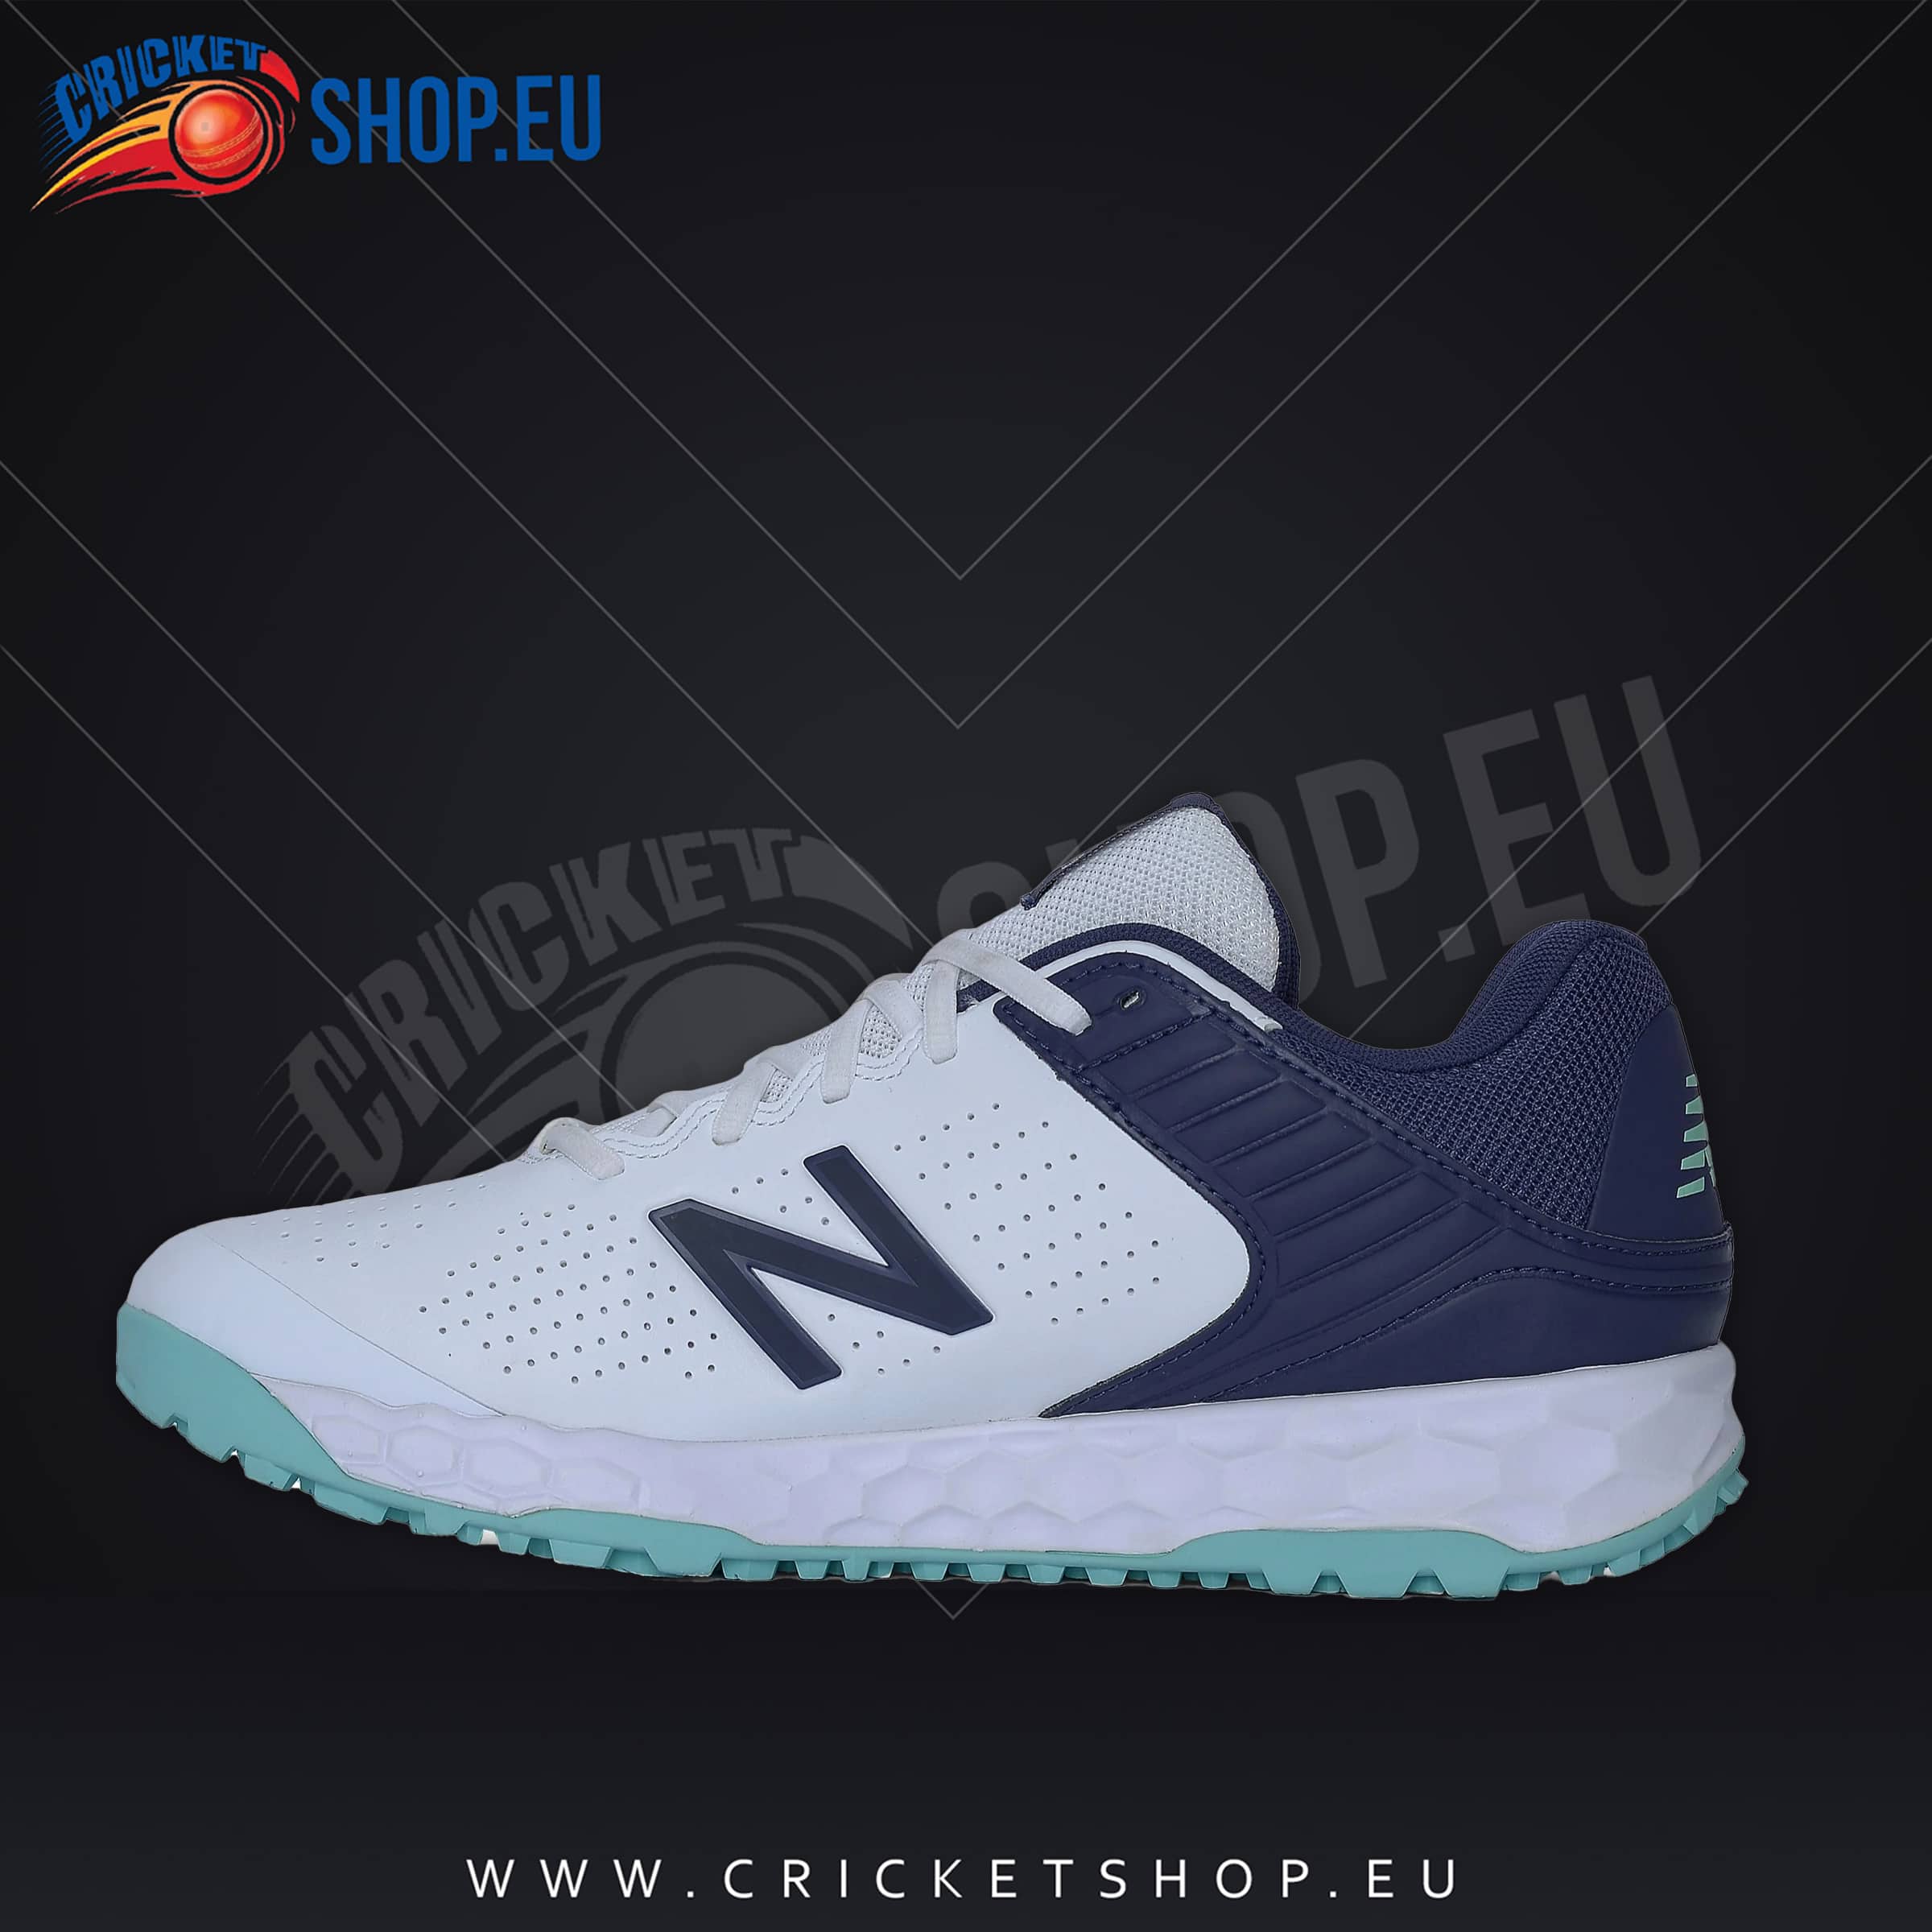 New Balance CK4020-J4 Cricket Shoes